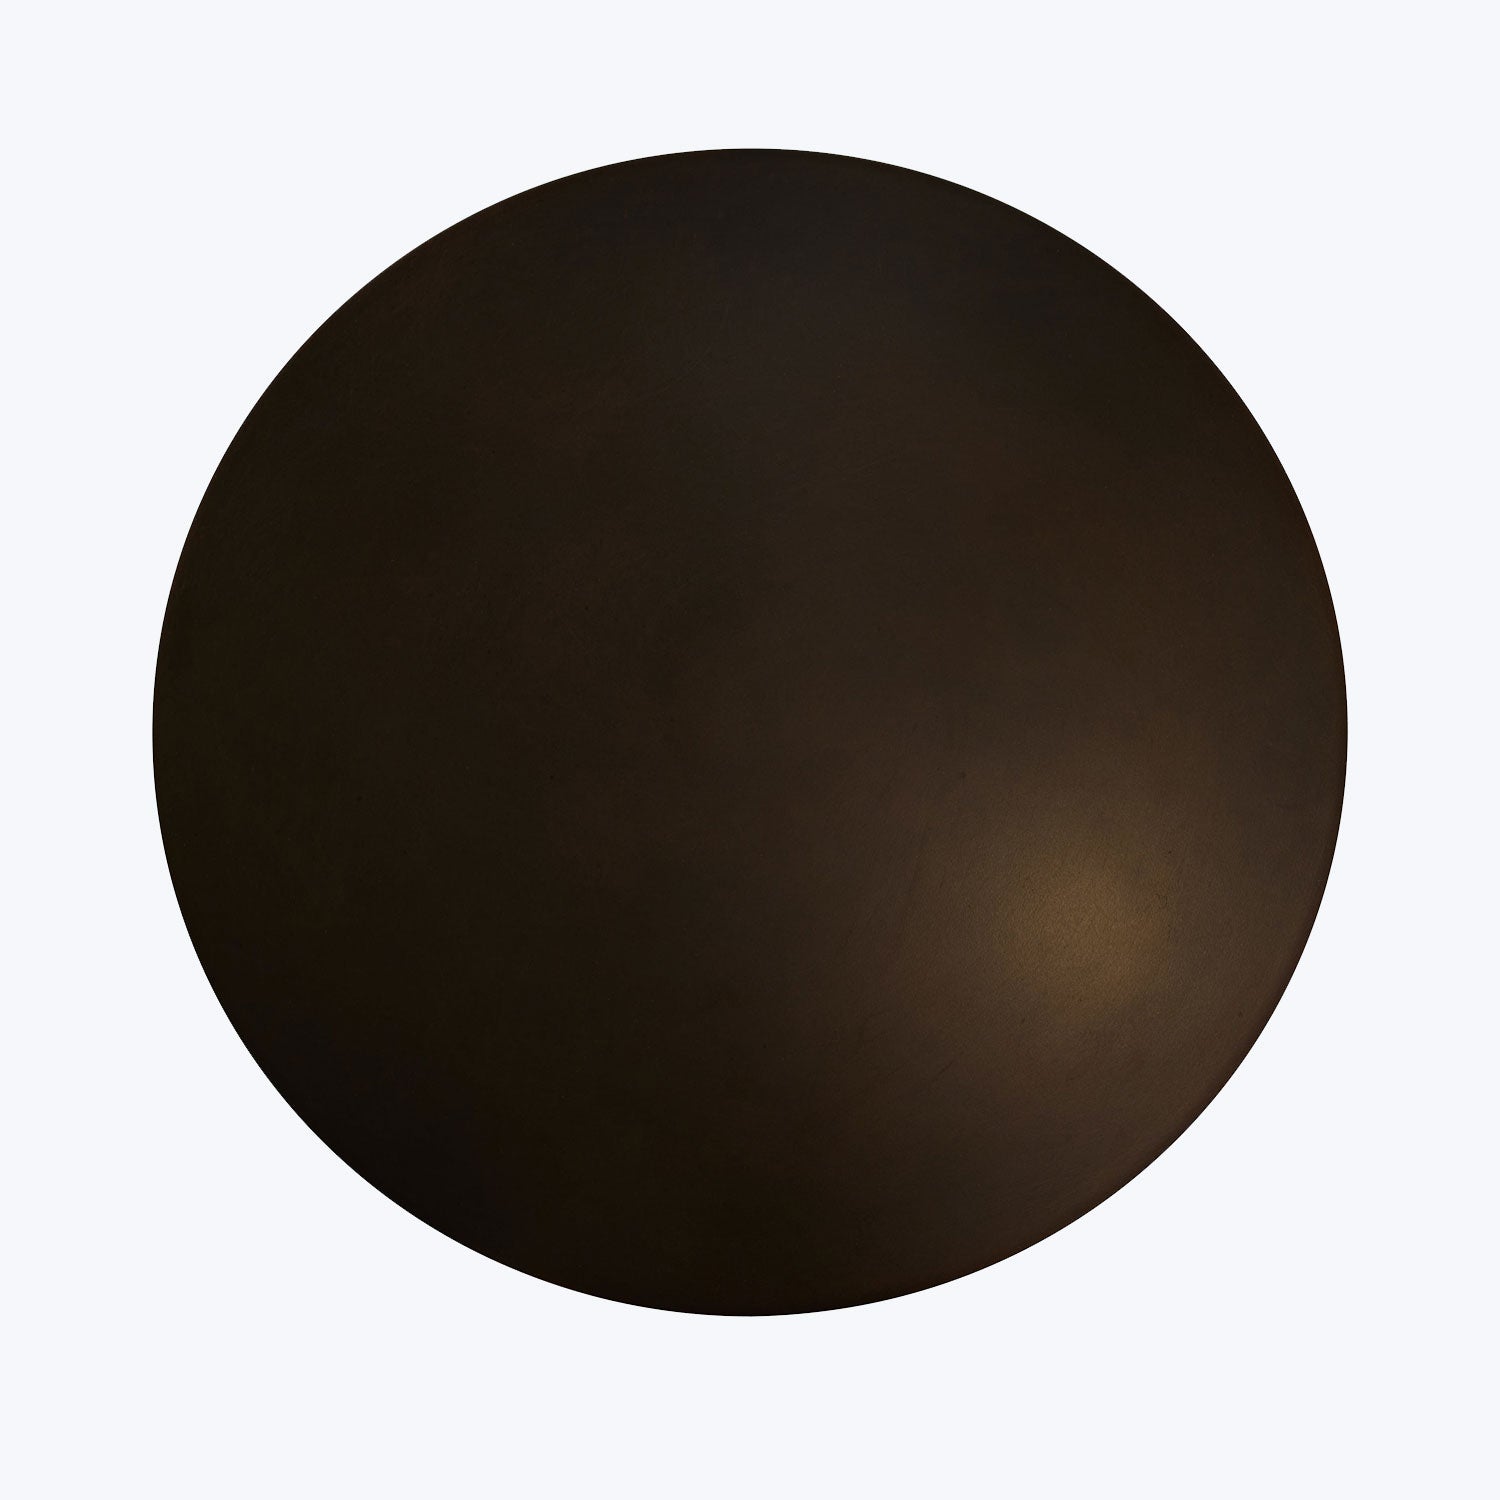 Mysterious dark circular object against a lighter background, open to interpretation.